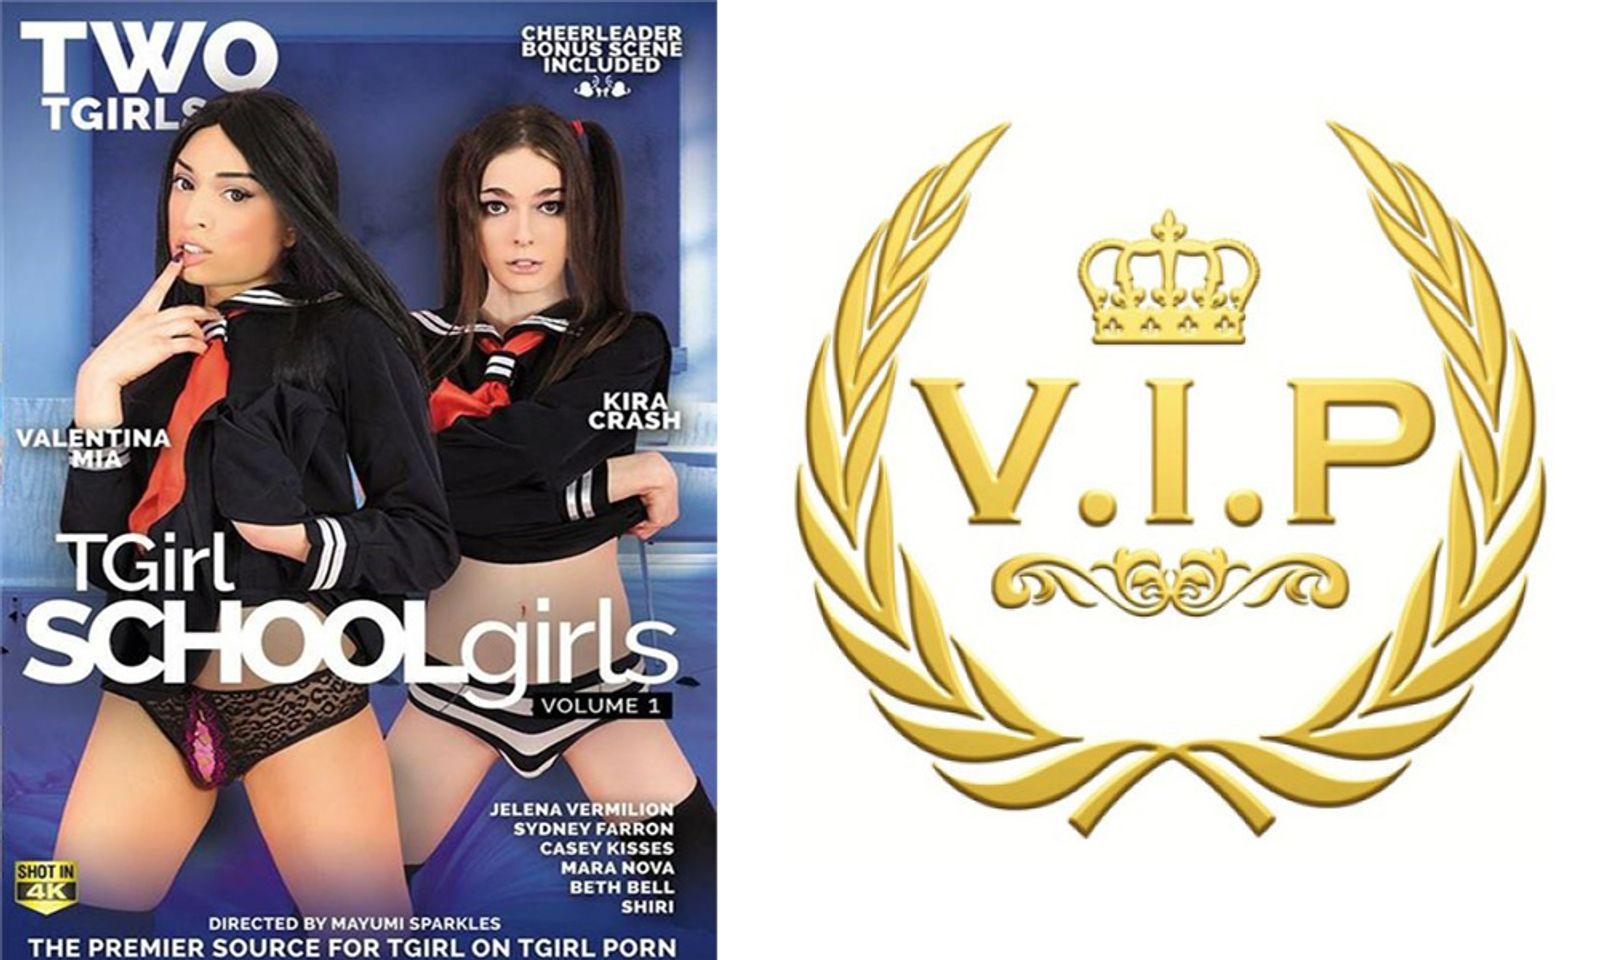 'TGirl Schoolgirls' Fill New DVD From Two Tgirls